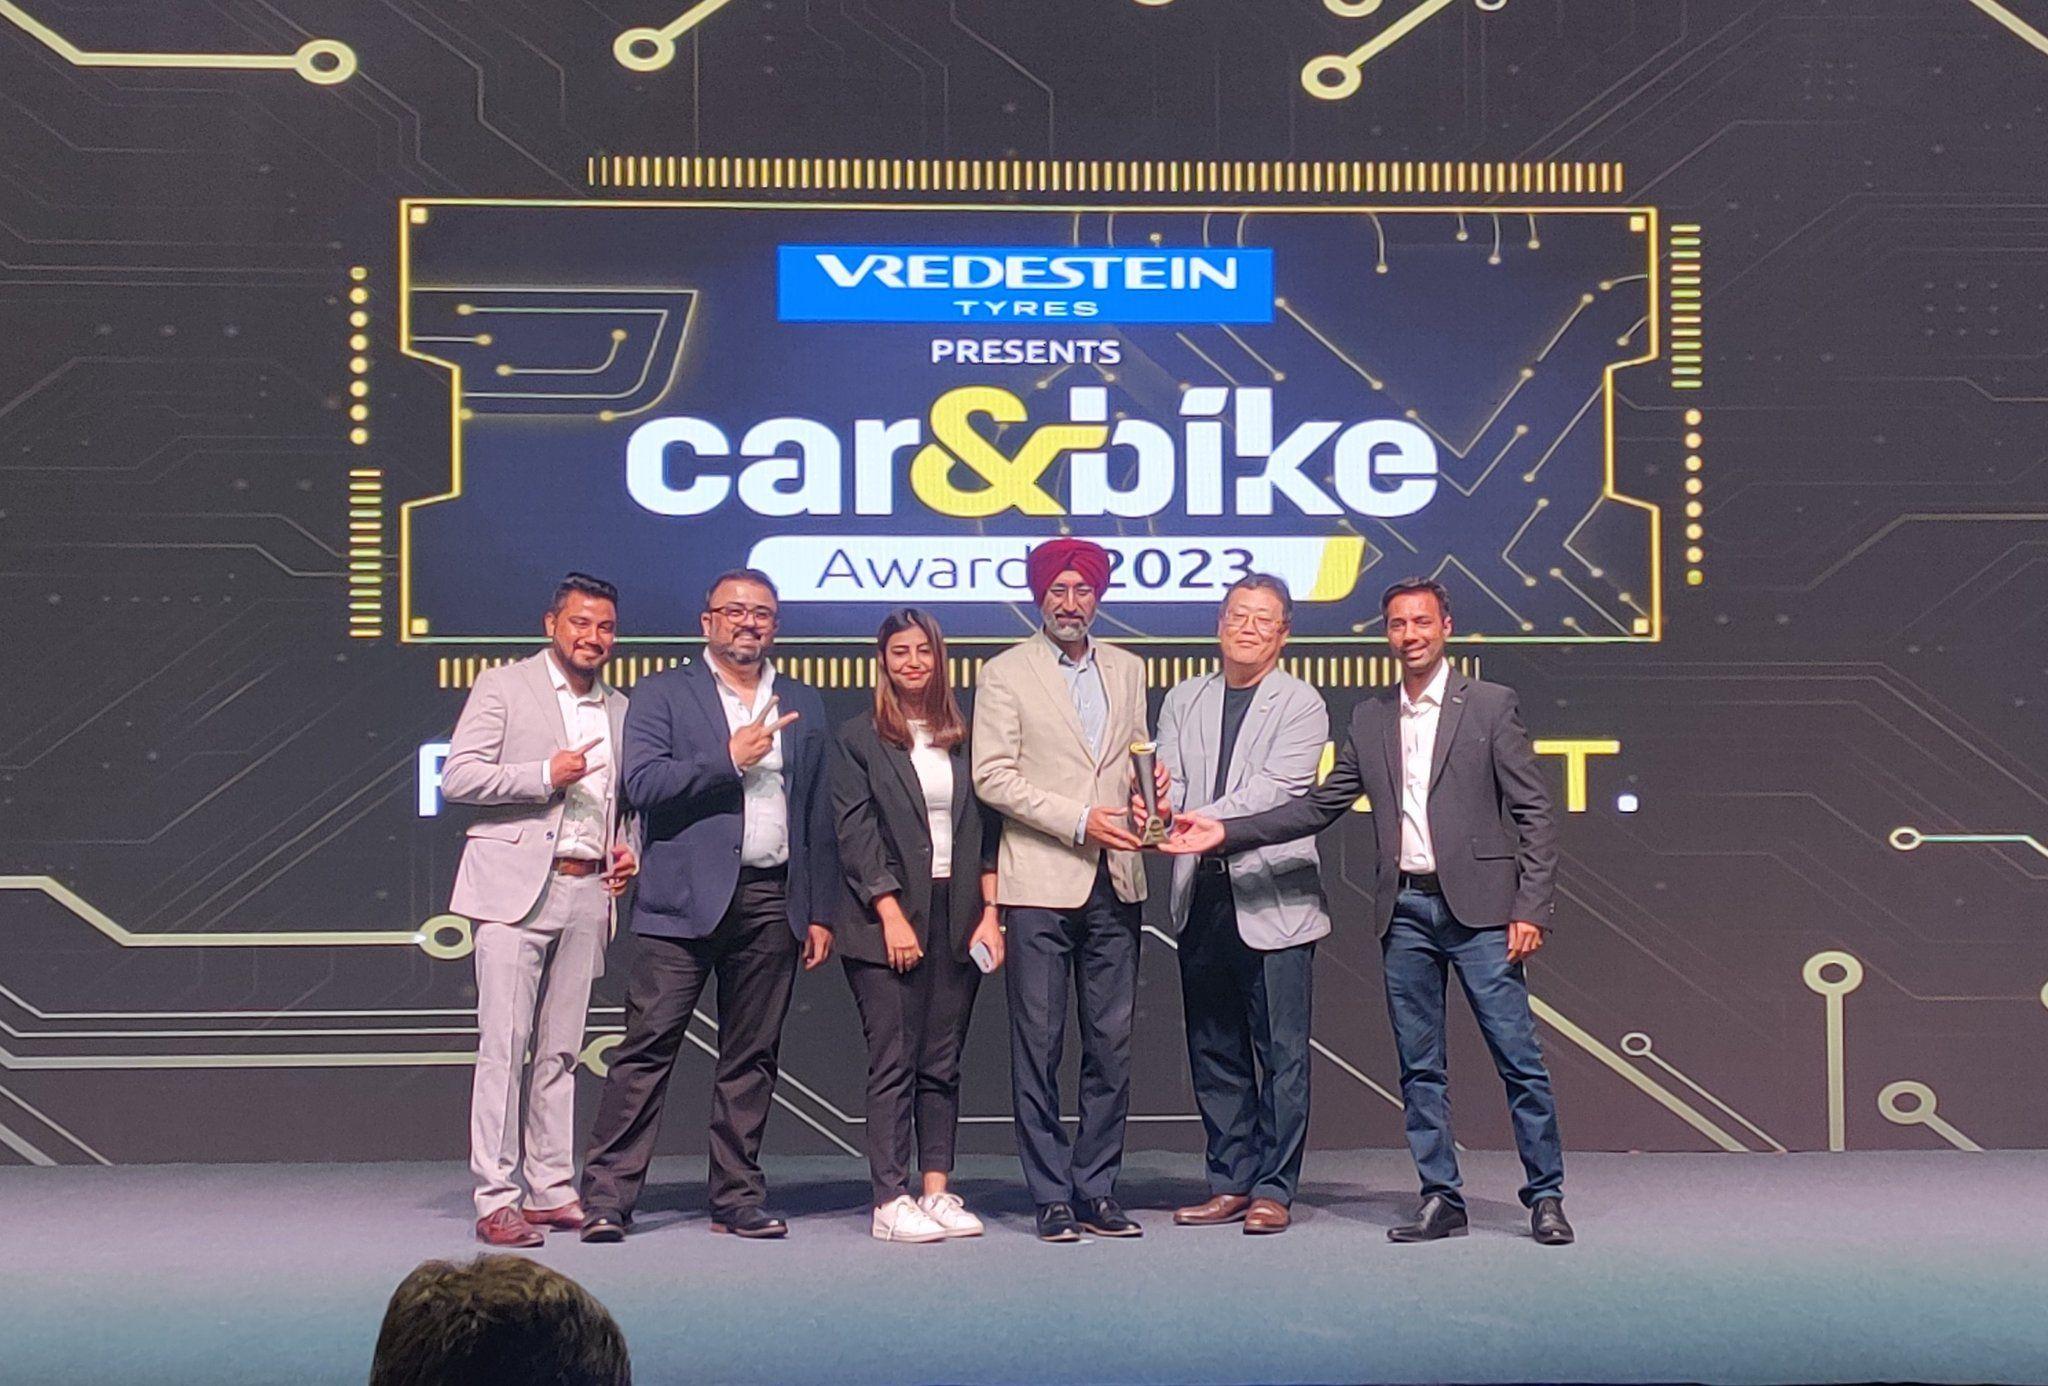 carandbike Awards 2023: Kia Carens Voted Viewers’ Choice Car Of The Year